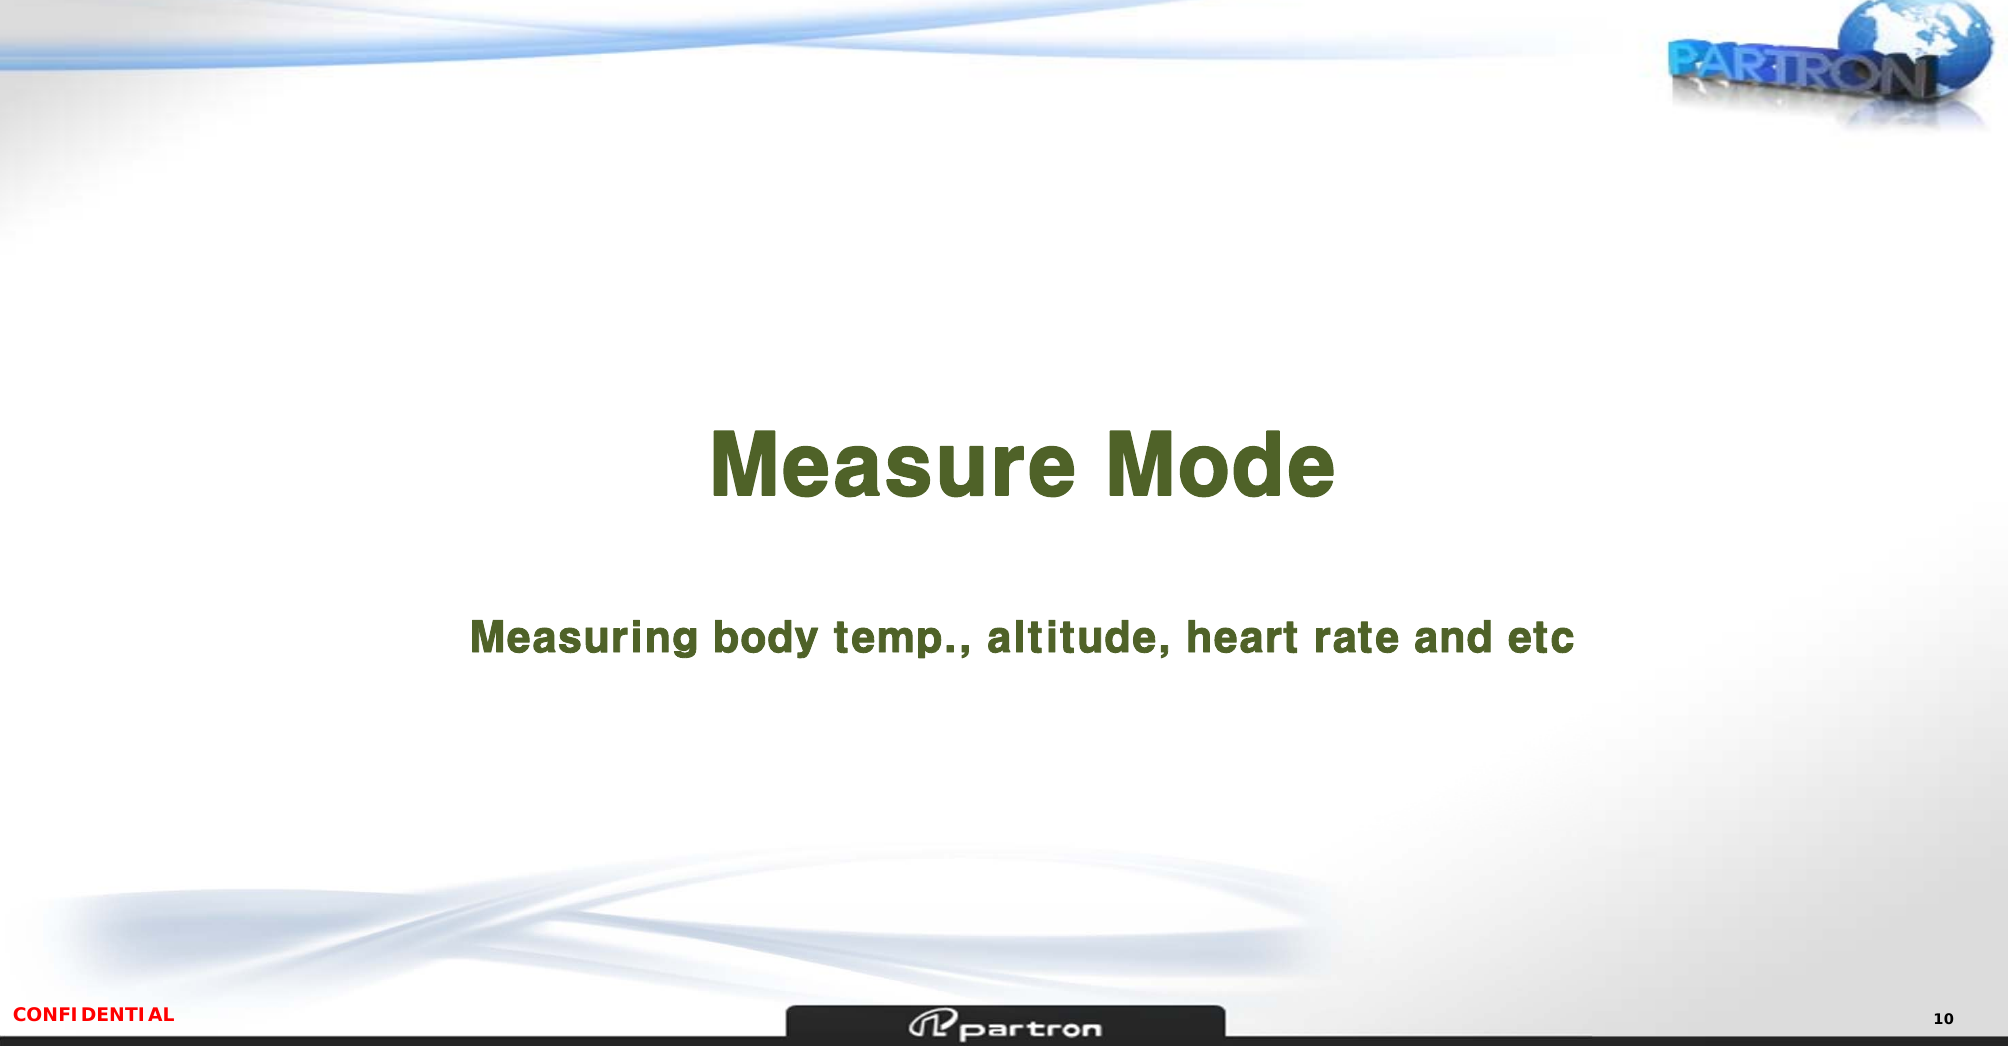 CONFIDENTIAL 10Measure ModeMeasuring body temp., altitude, heart rate and etc